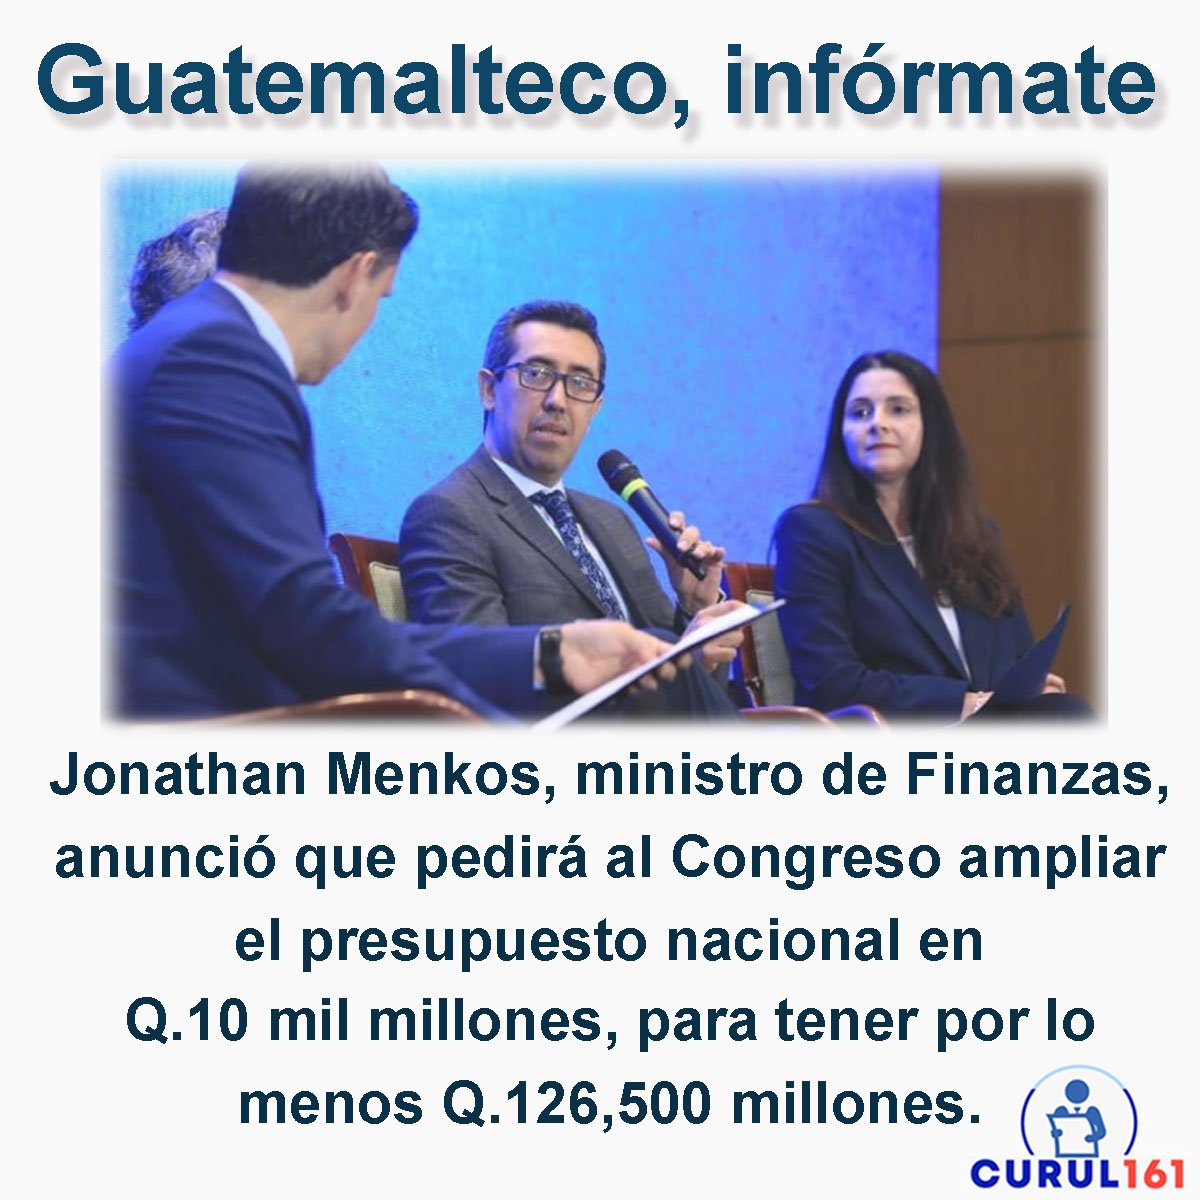 #GuatemaltecoInfórmate #JonathanMenkos #Ampliación #PresupuestoNacional #CongresoGuatemala